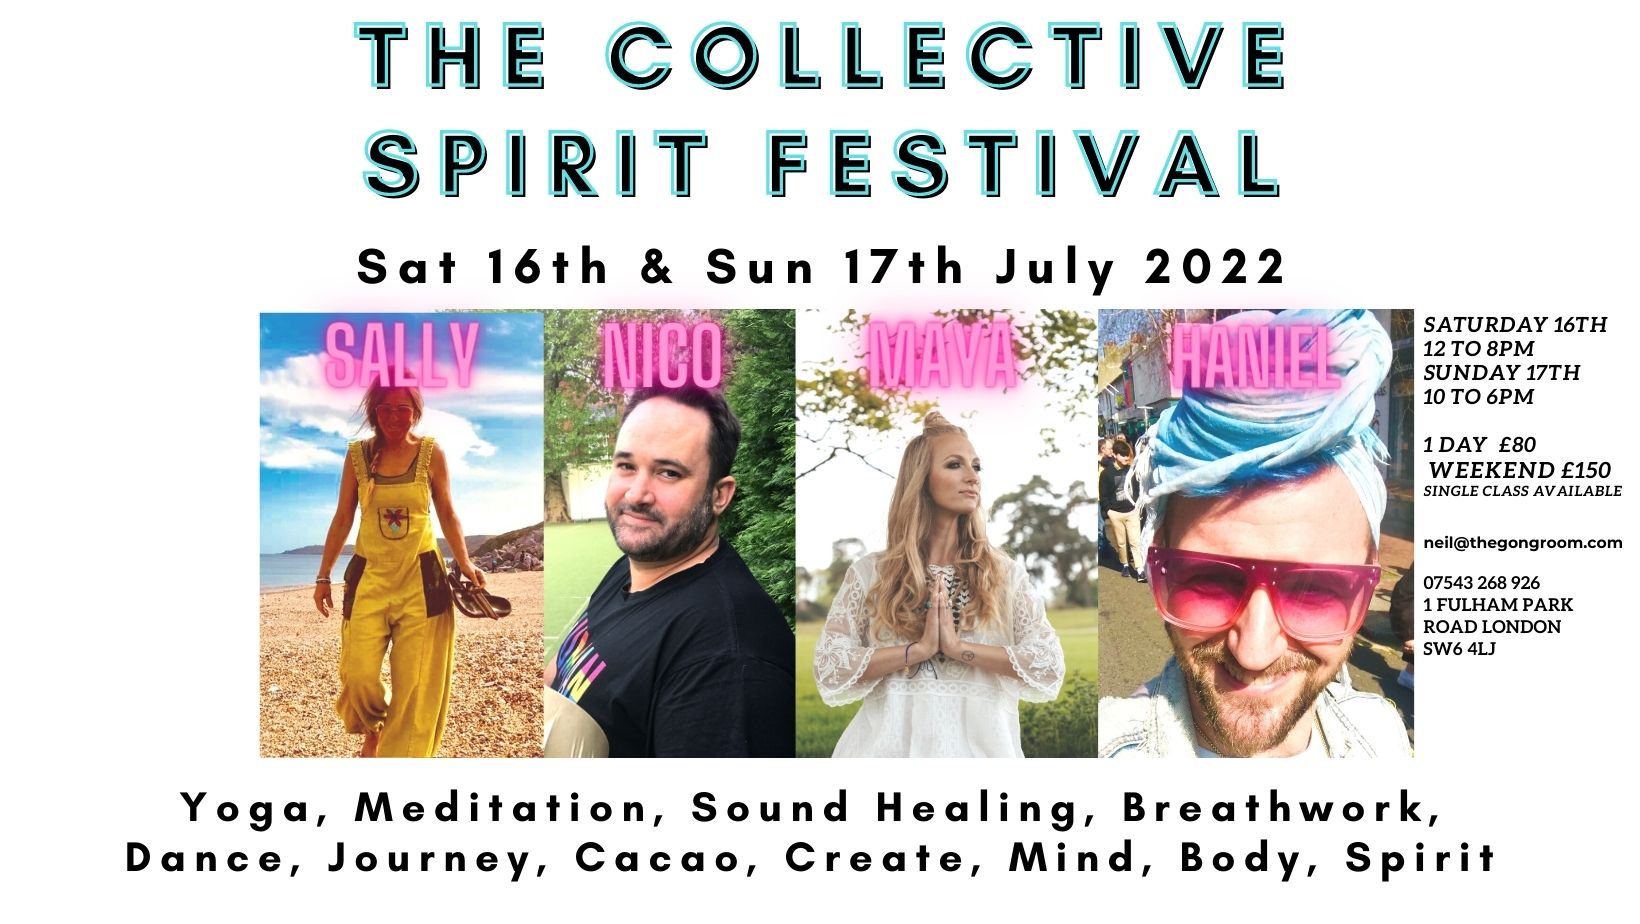 LONDON - The Collective Spirit Wellness Weekend